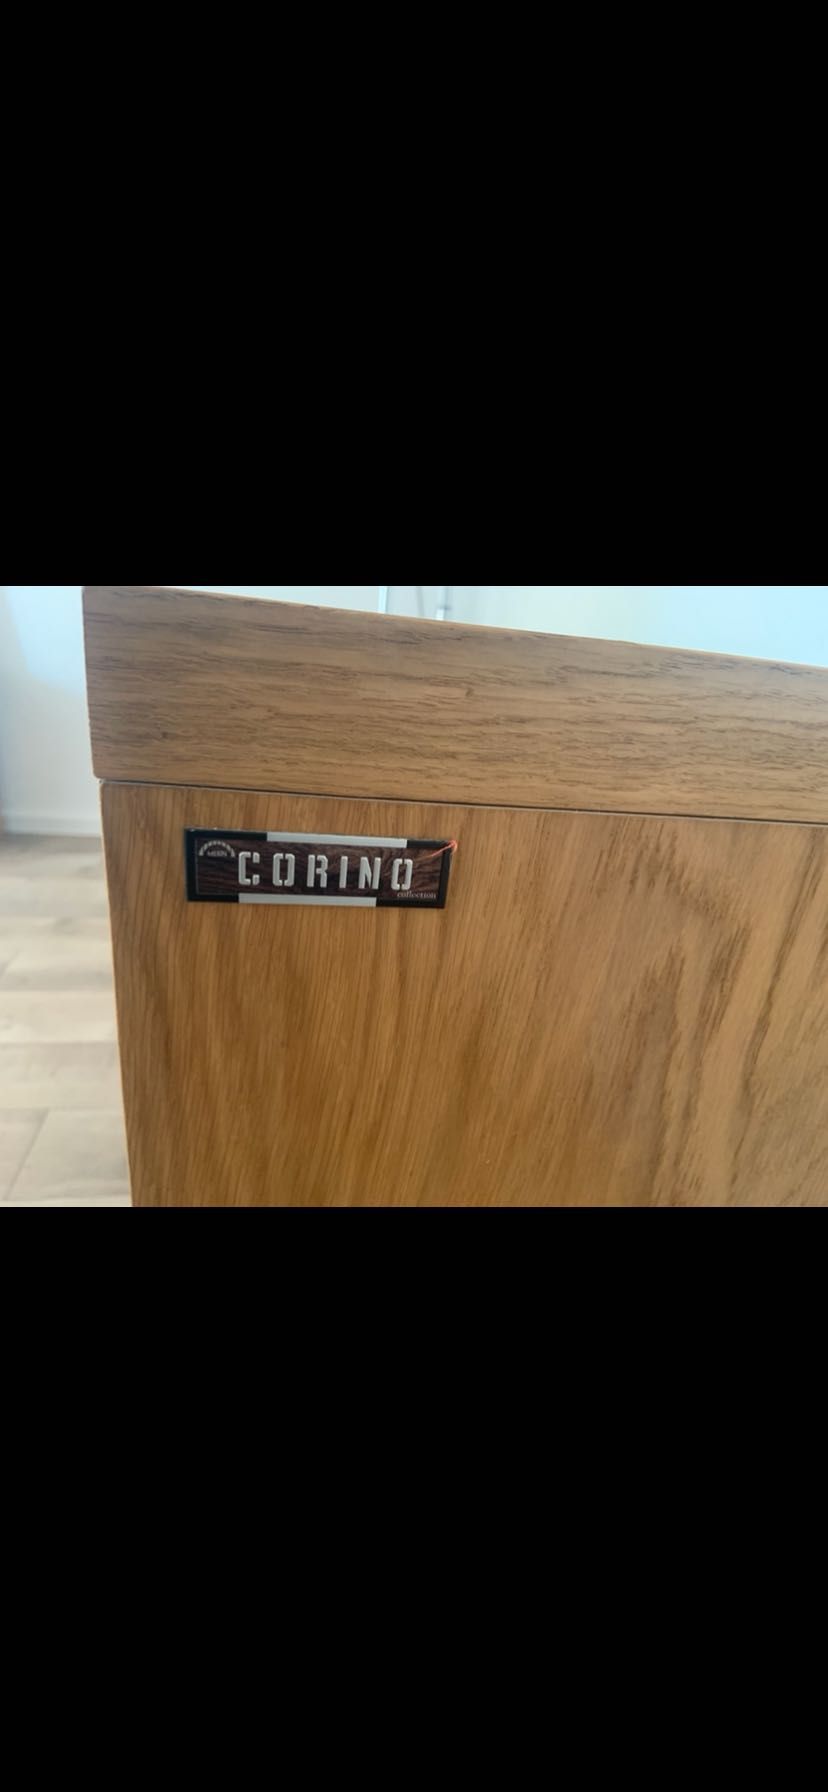 Piękne dębowe biurko marki Corino